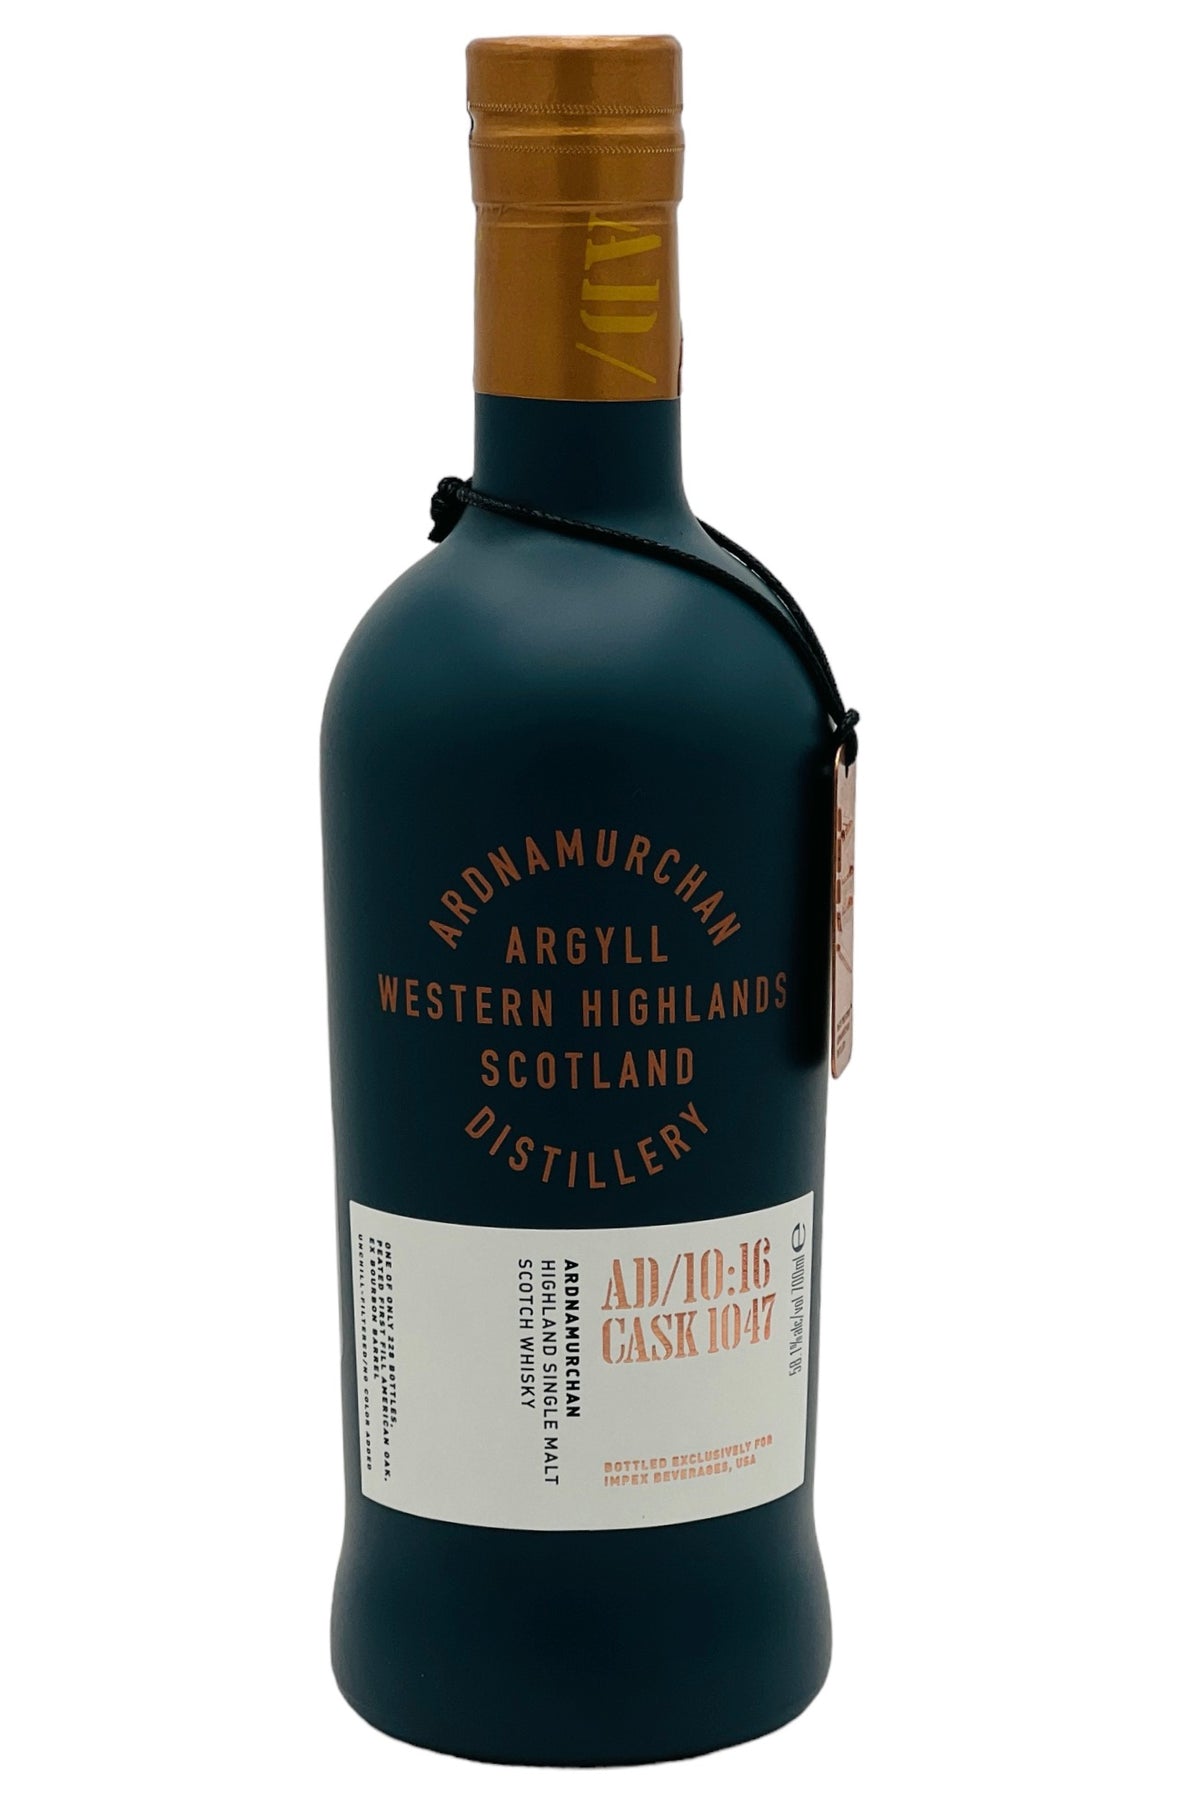 Ardnamurchan AD/10:16 Cask 1047 Single Malt Scotch Whisky